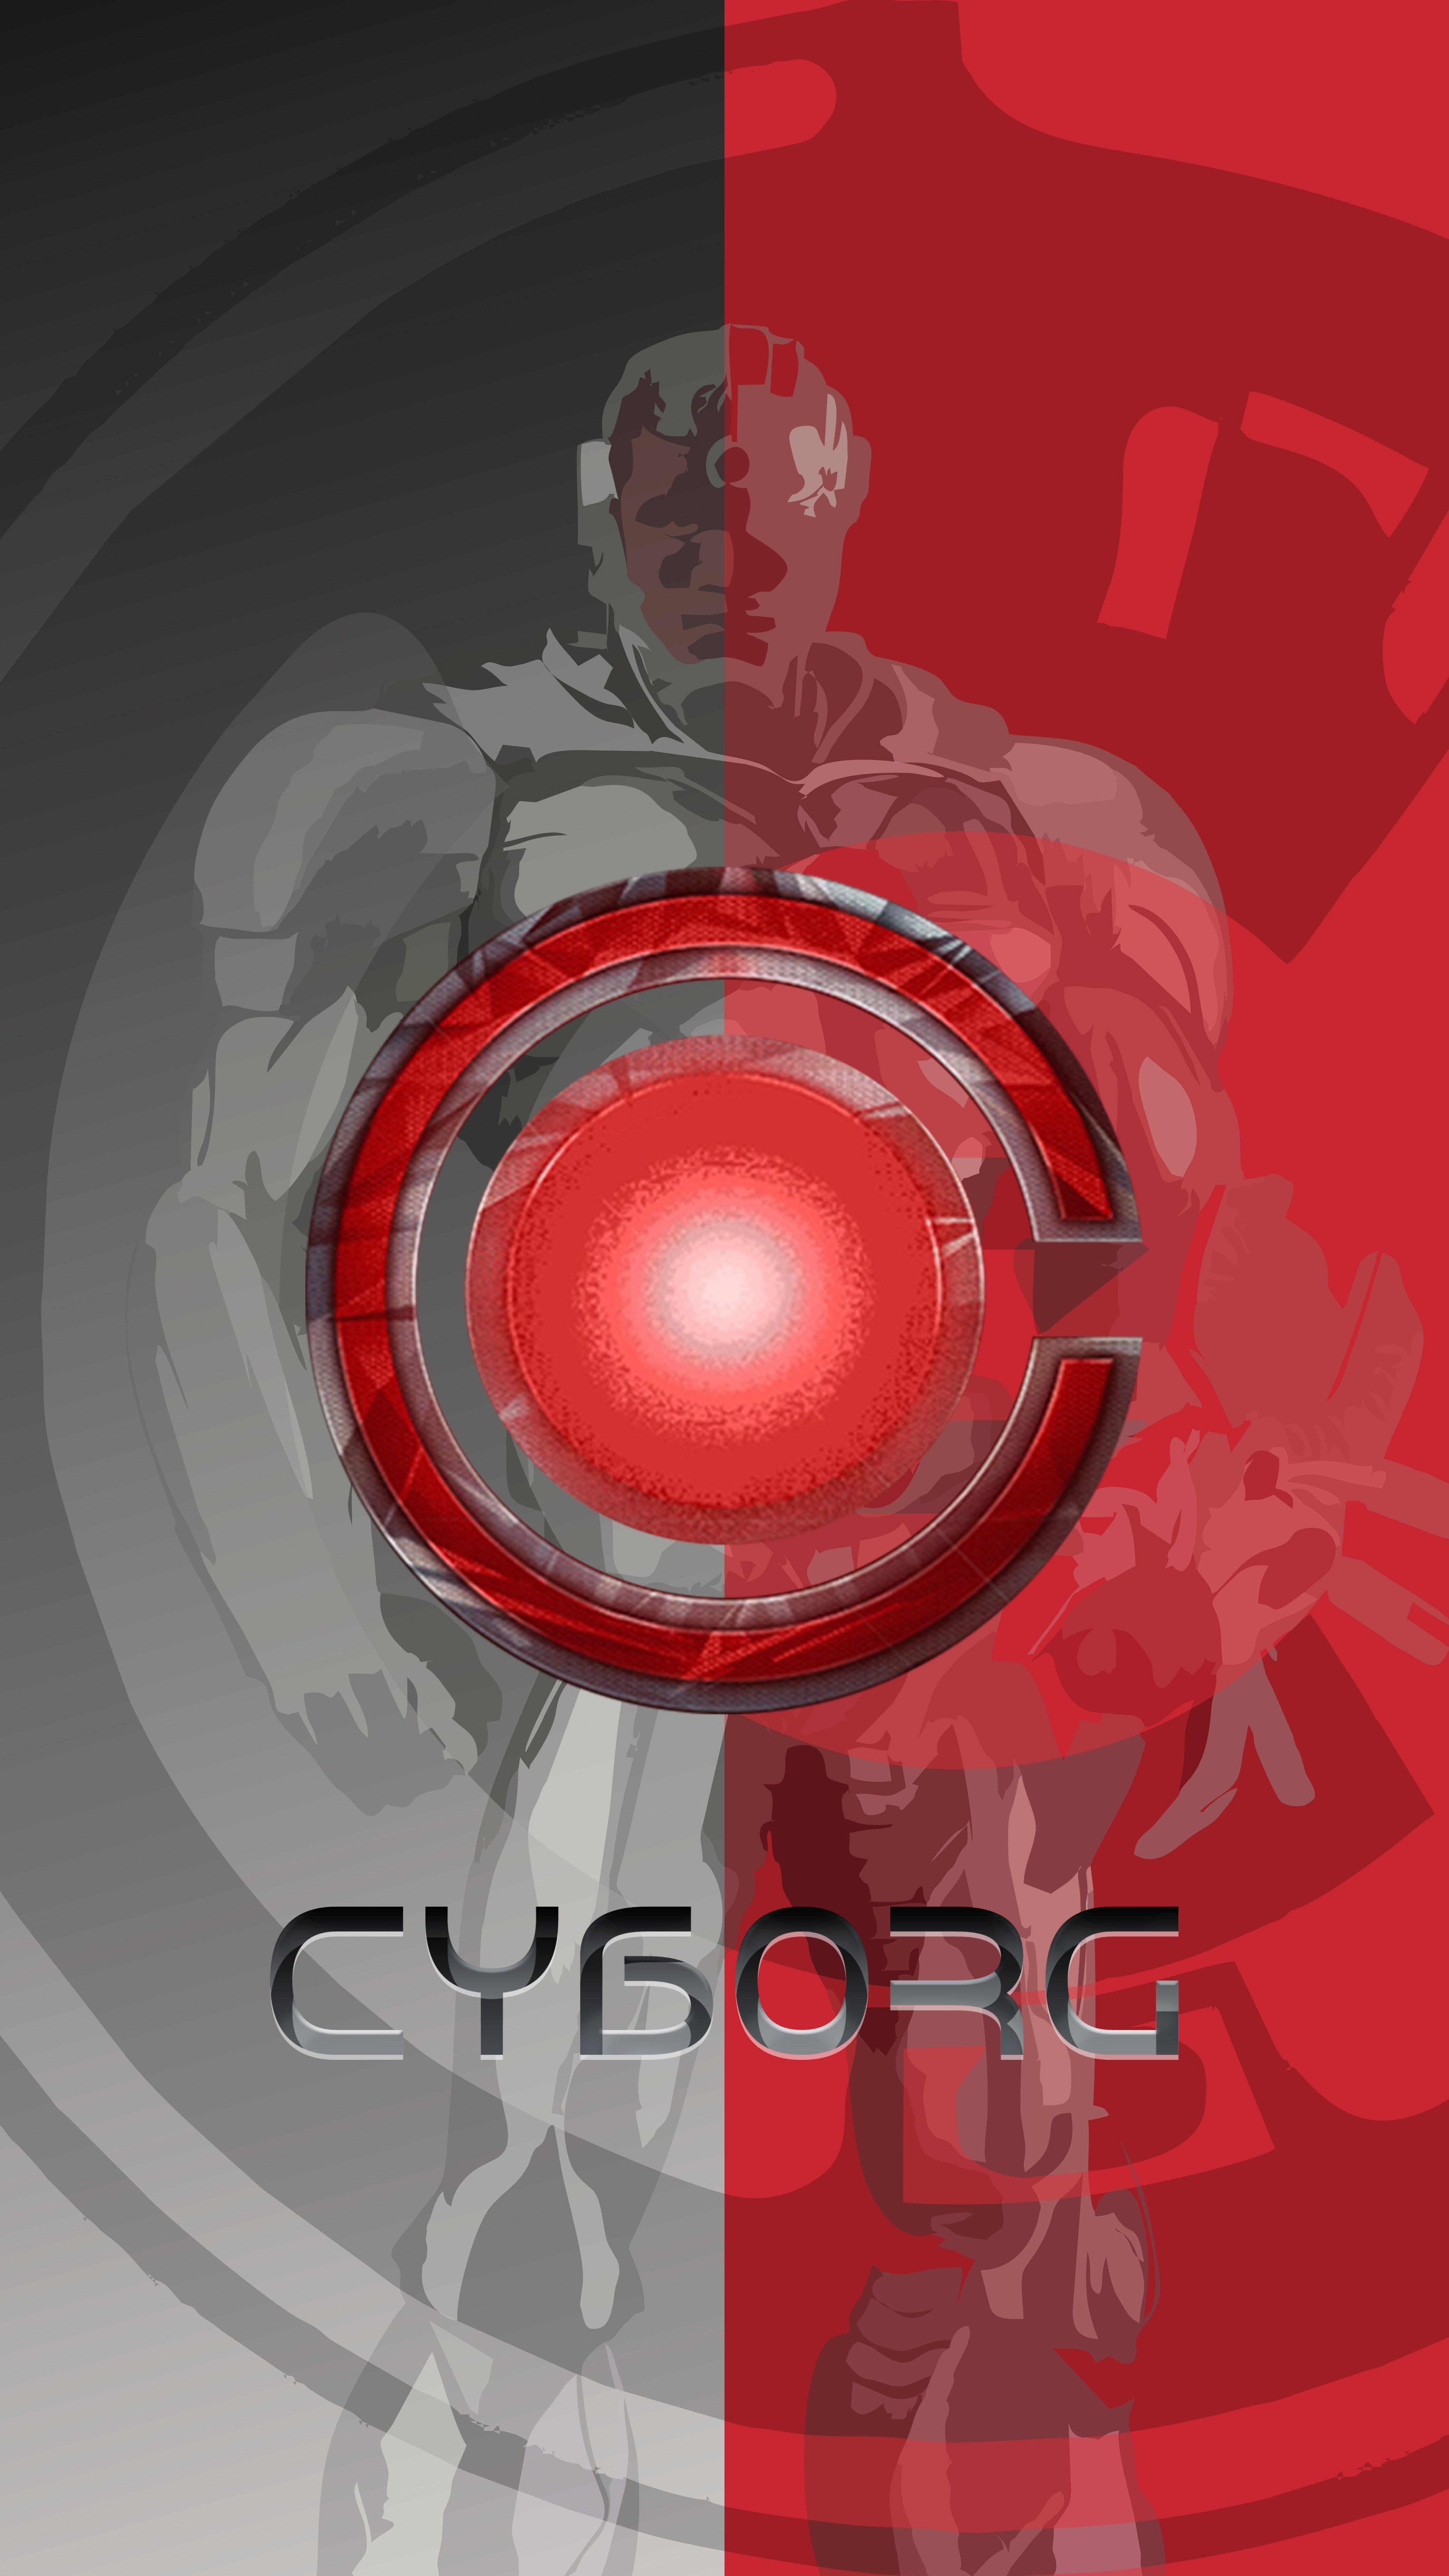 Cyborg iPhone Wallpaper Free Cyborg iPhone Background